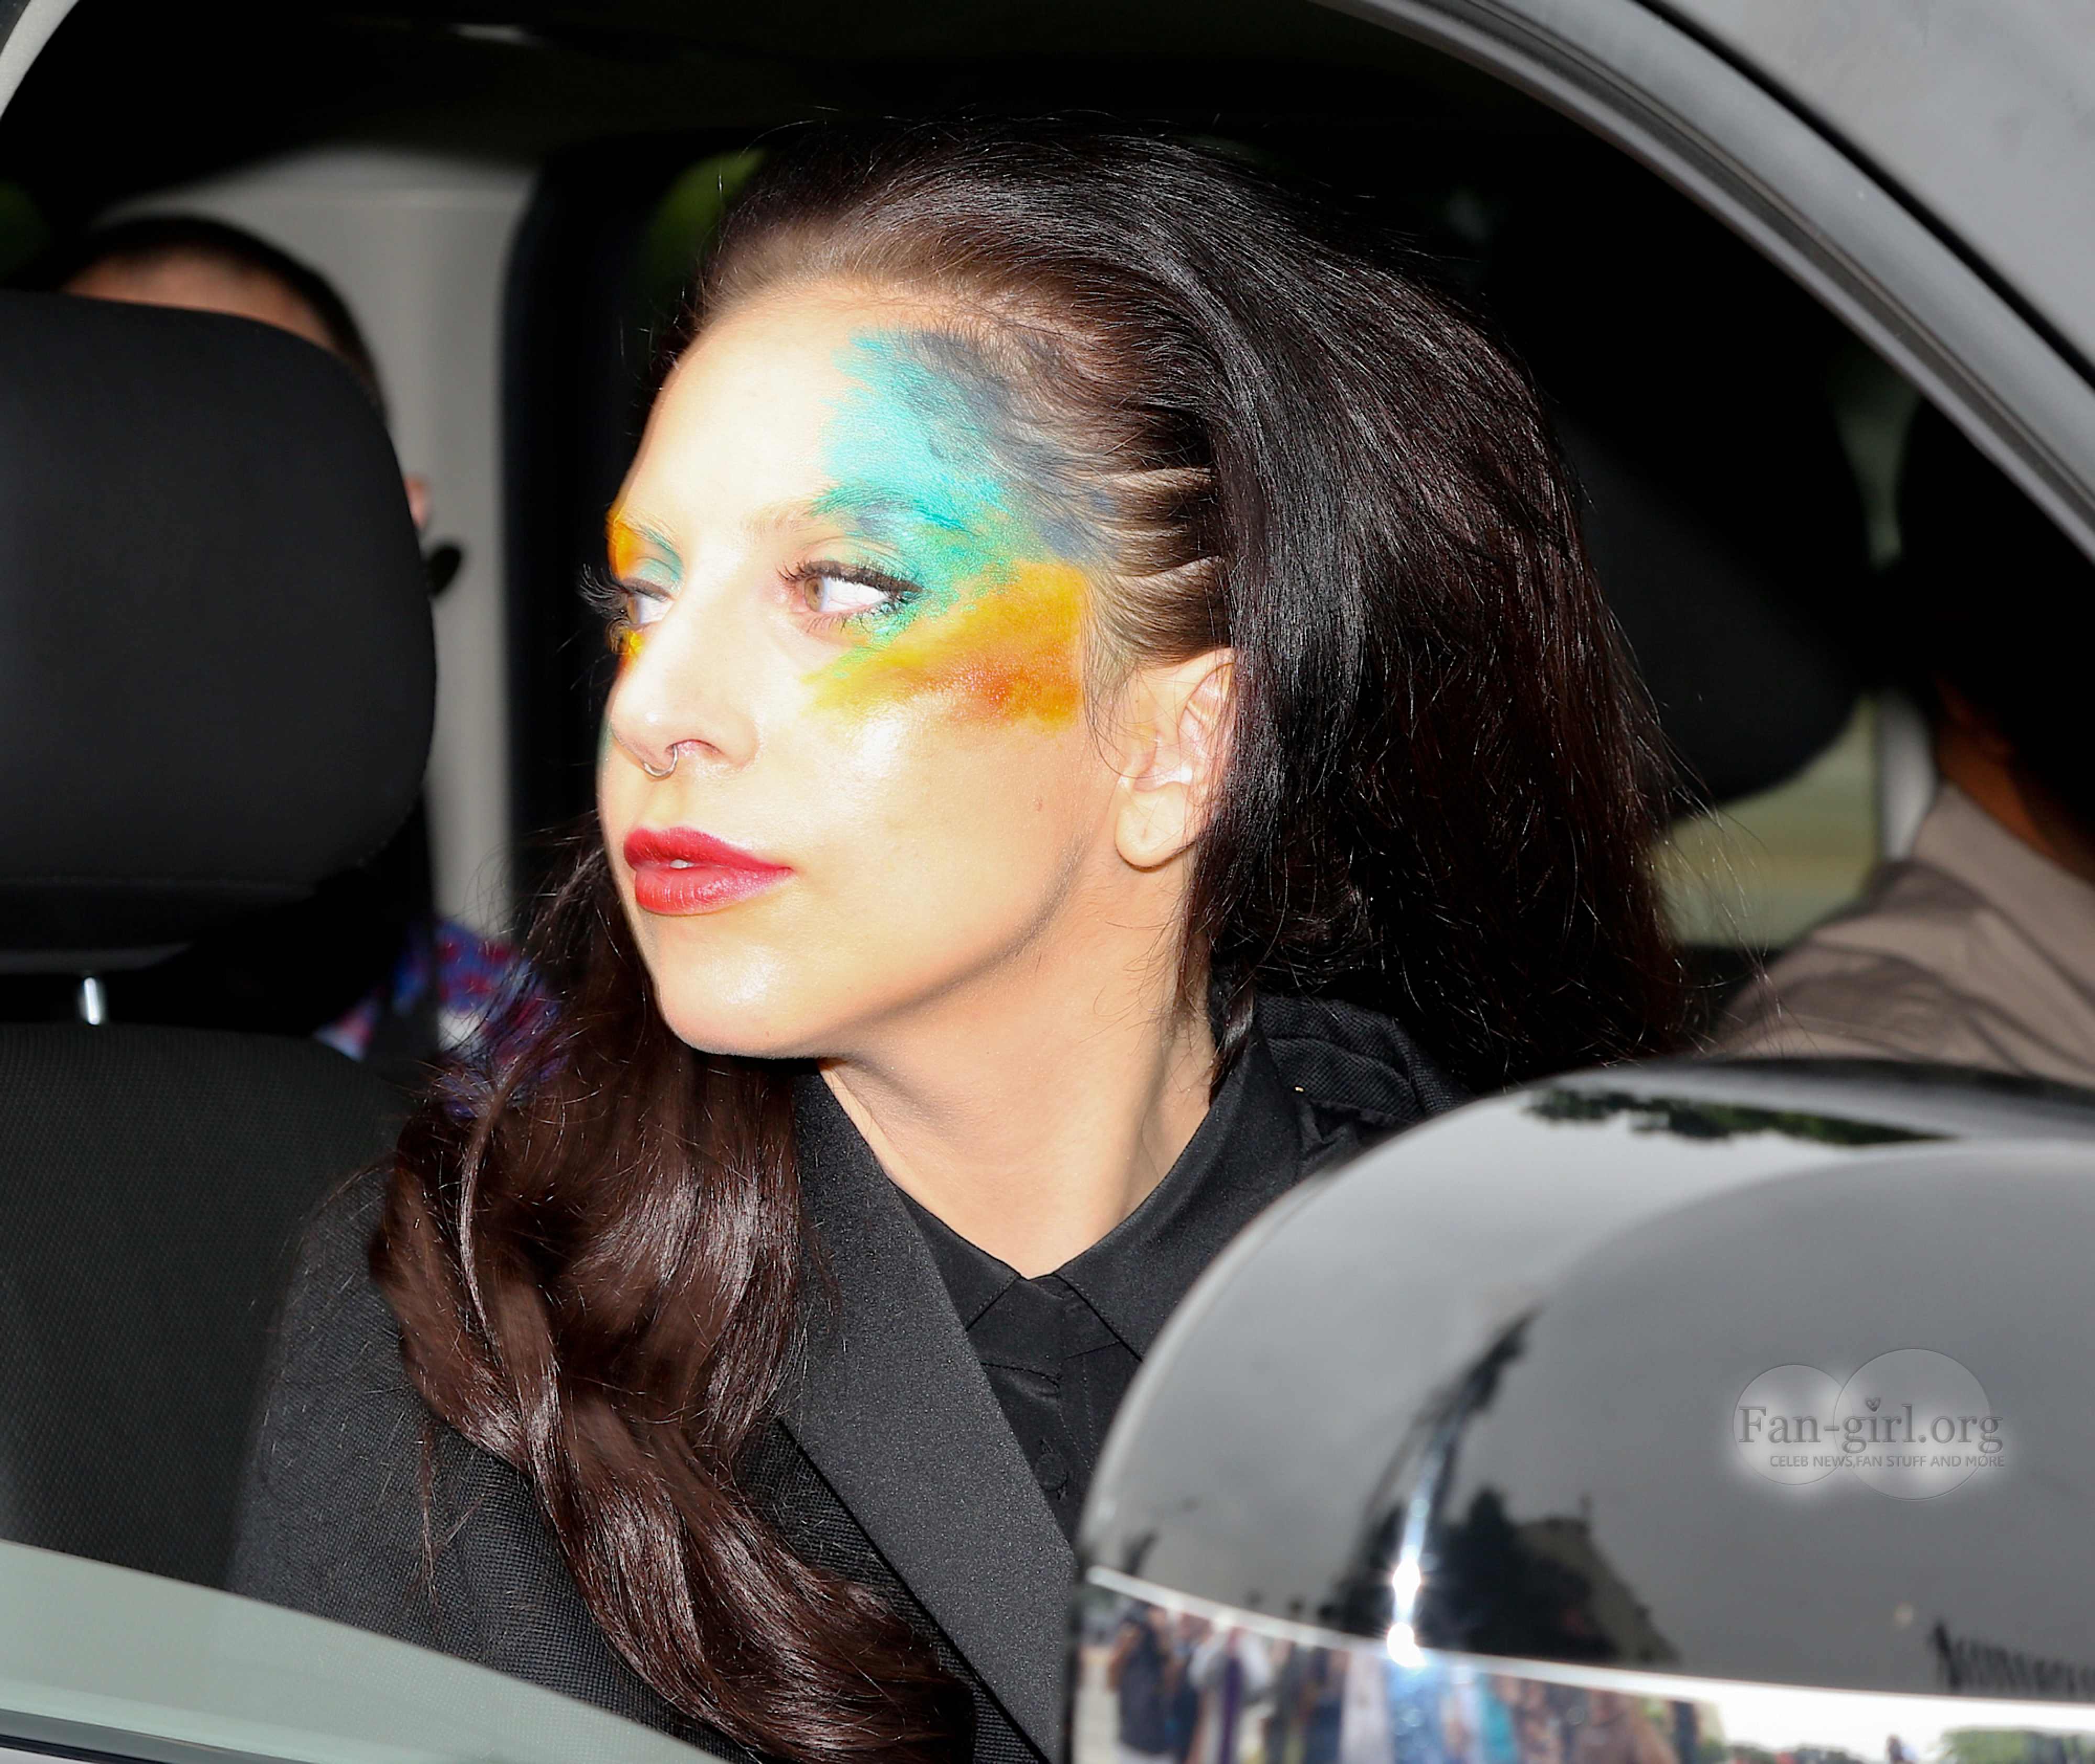 General photo of Lady Gaga